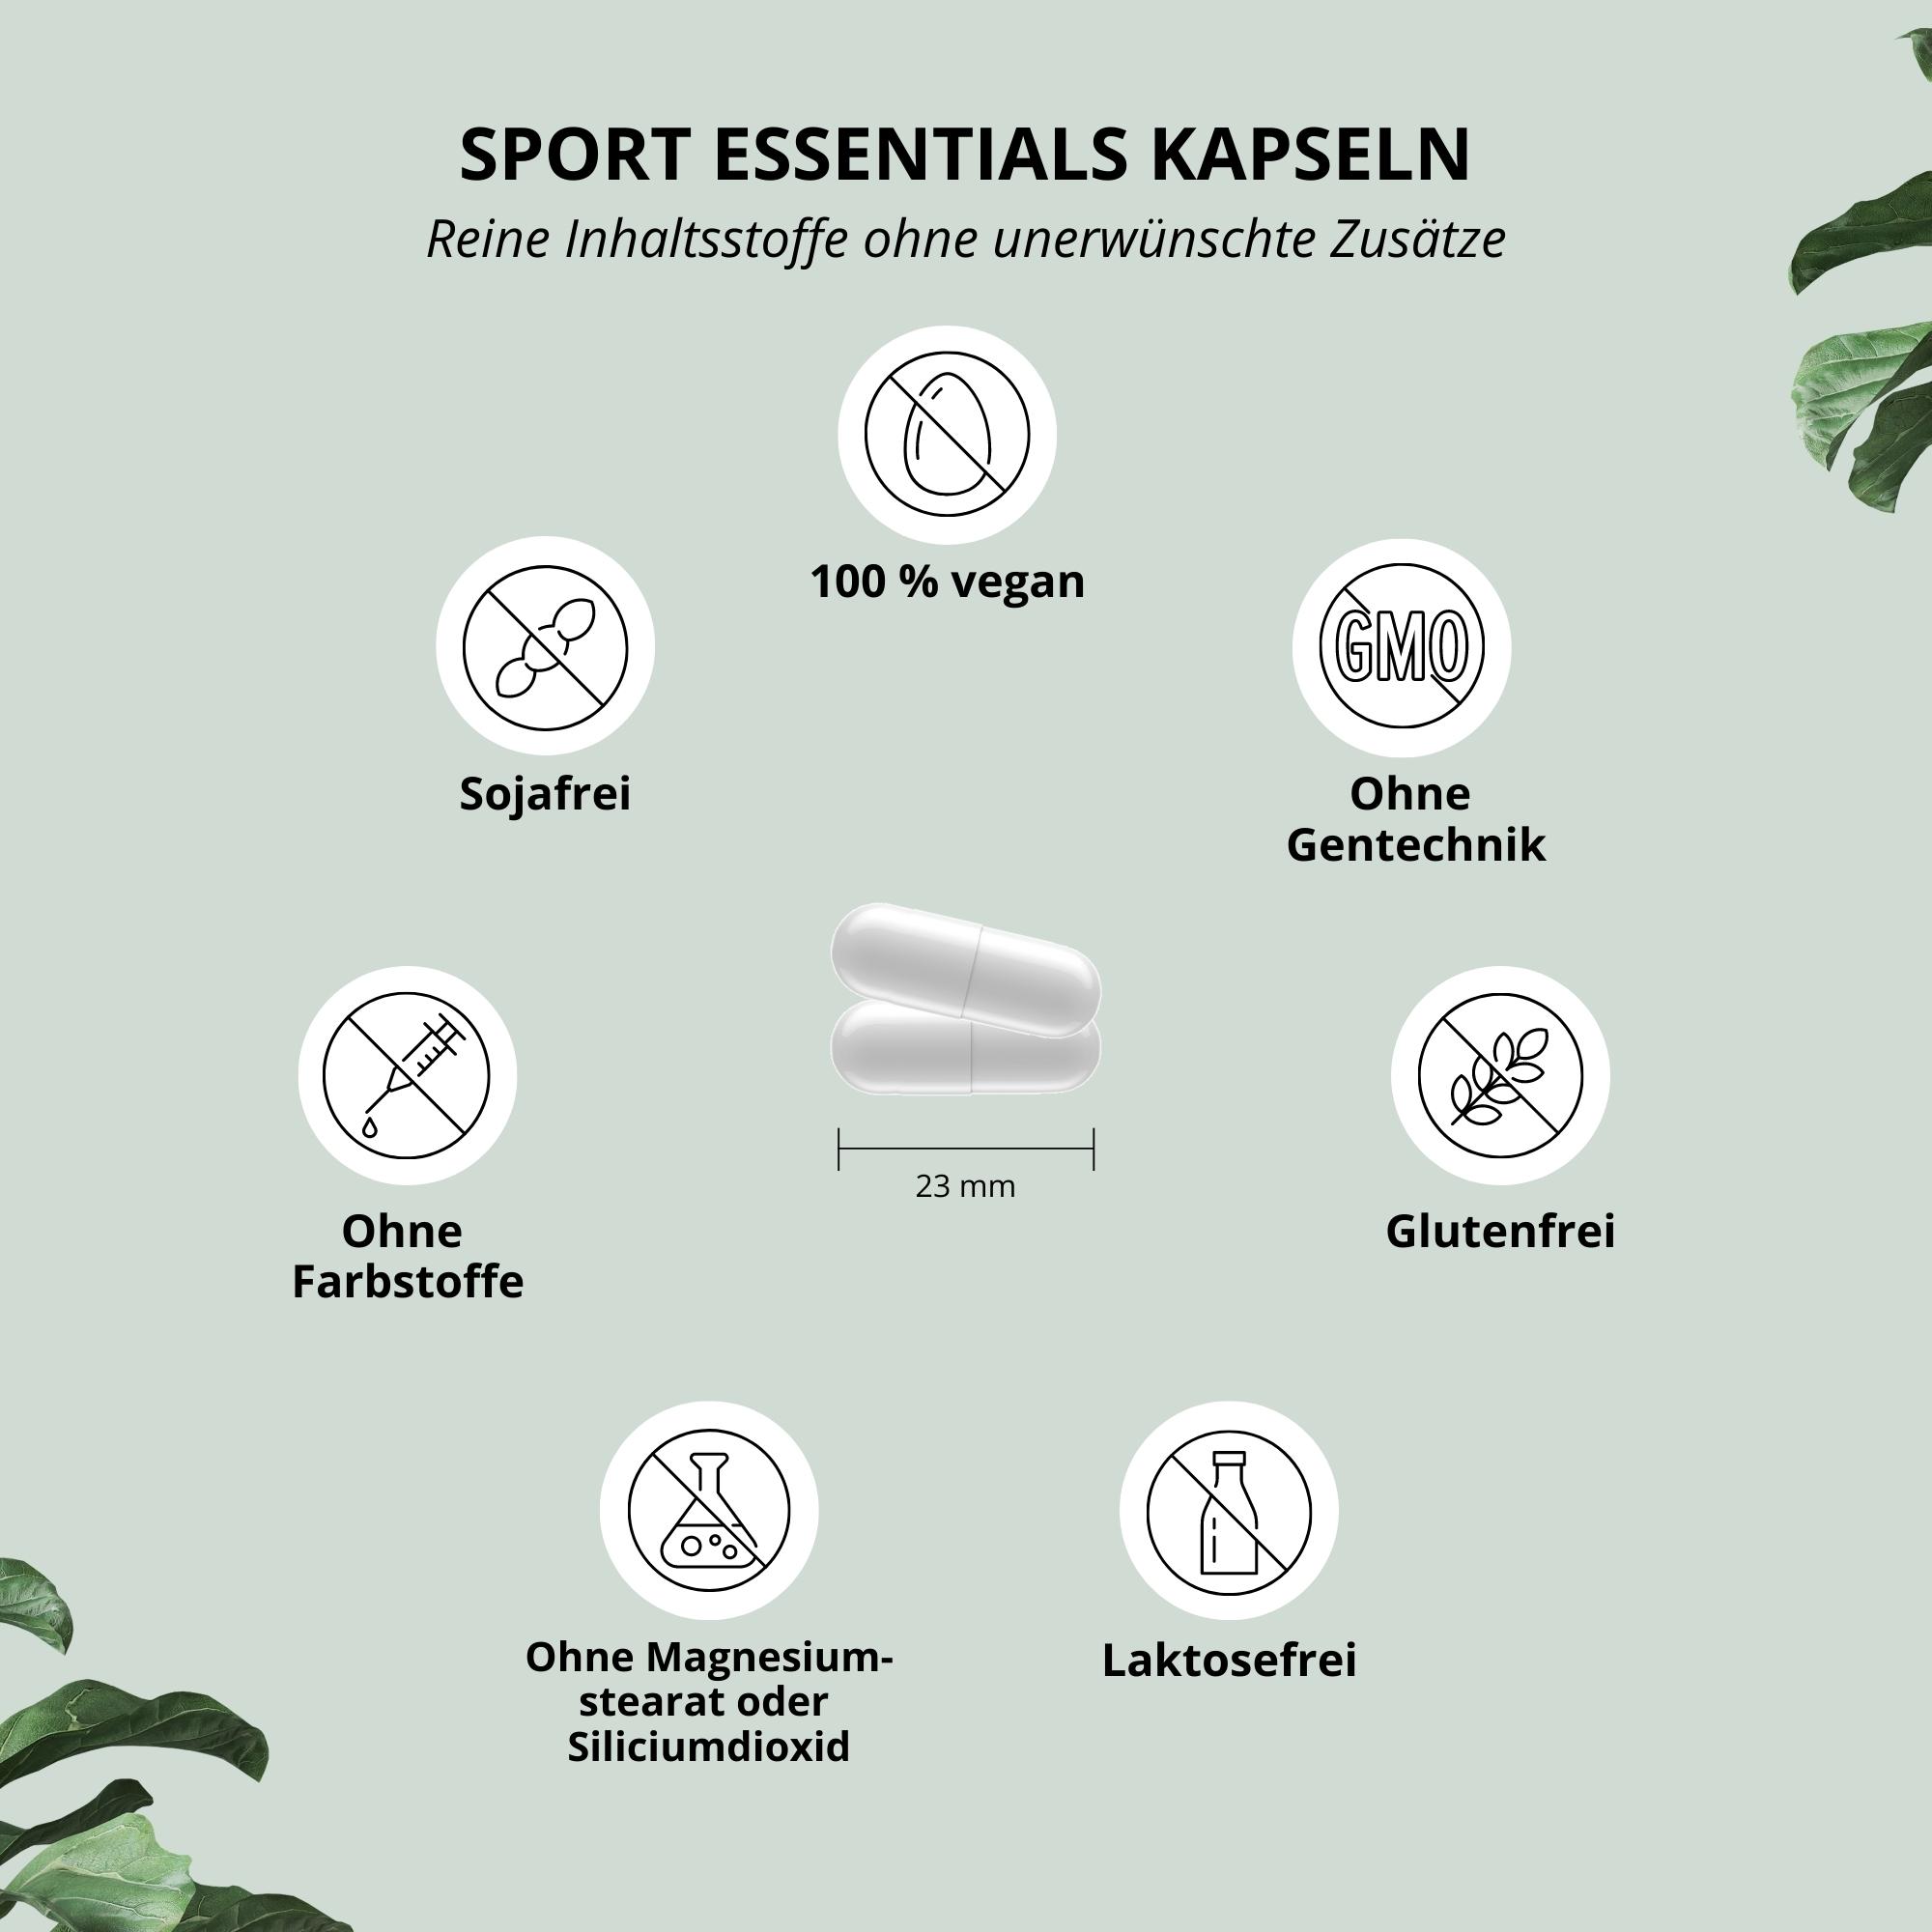 Sport Essentials - Vital substances for athletes